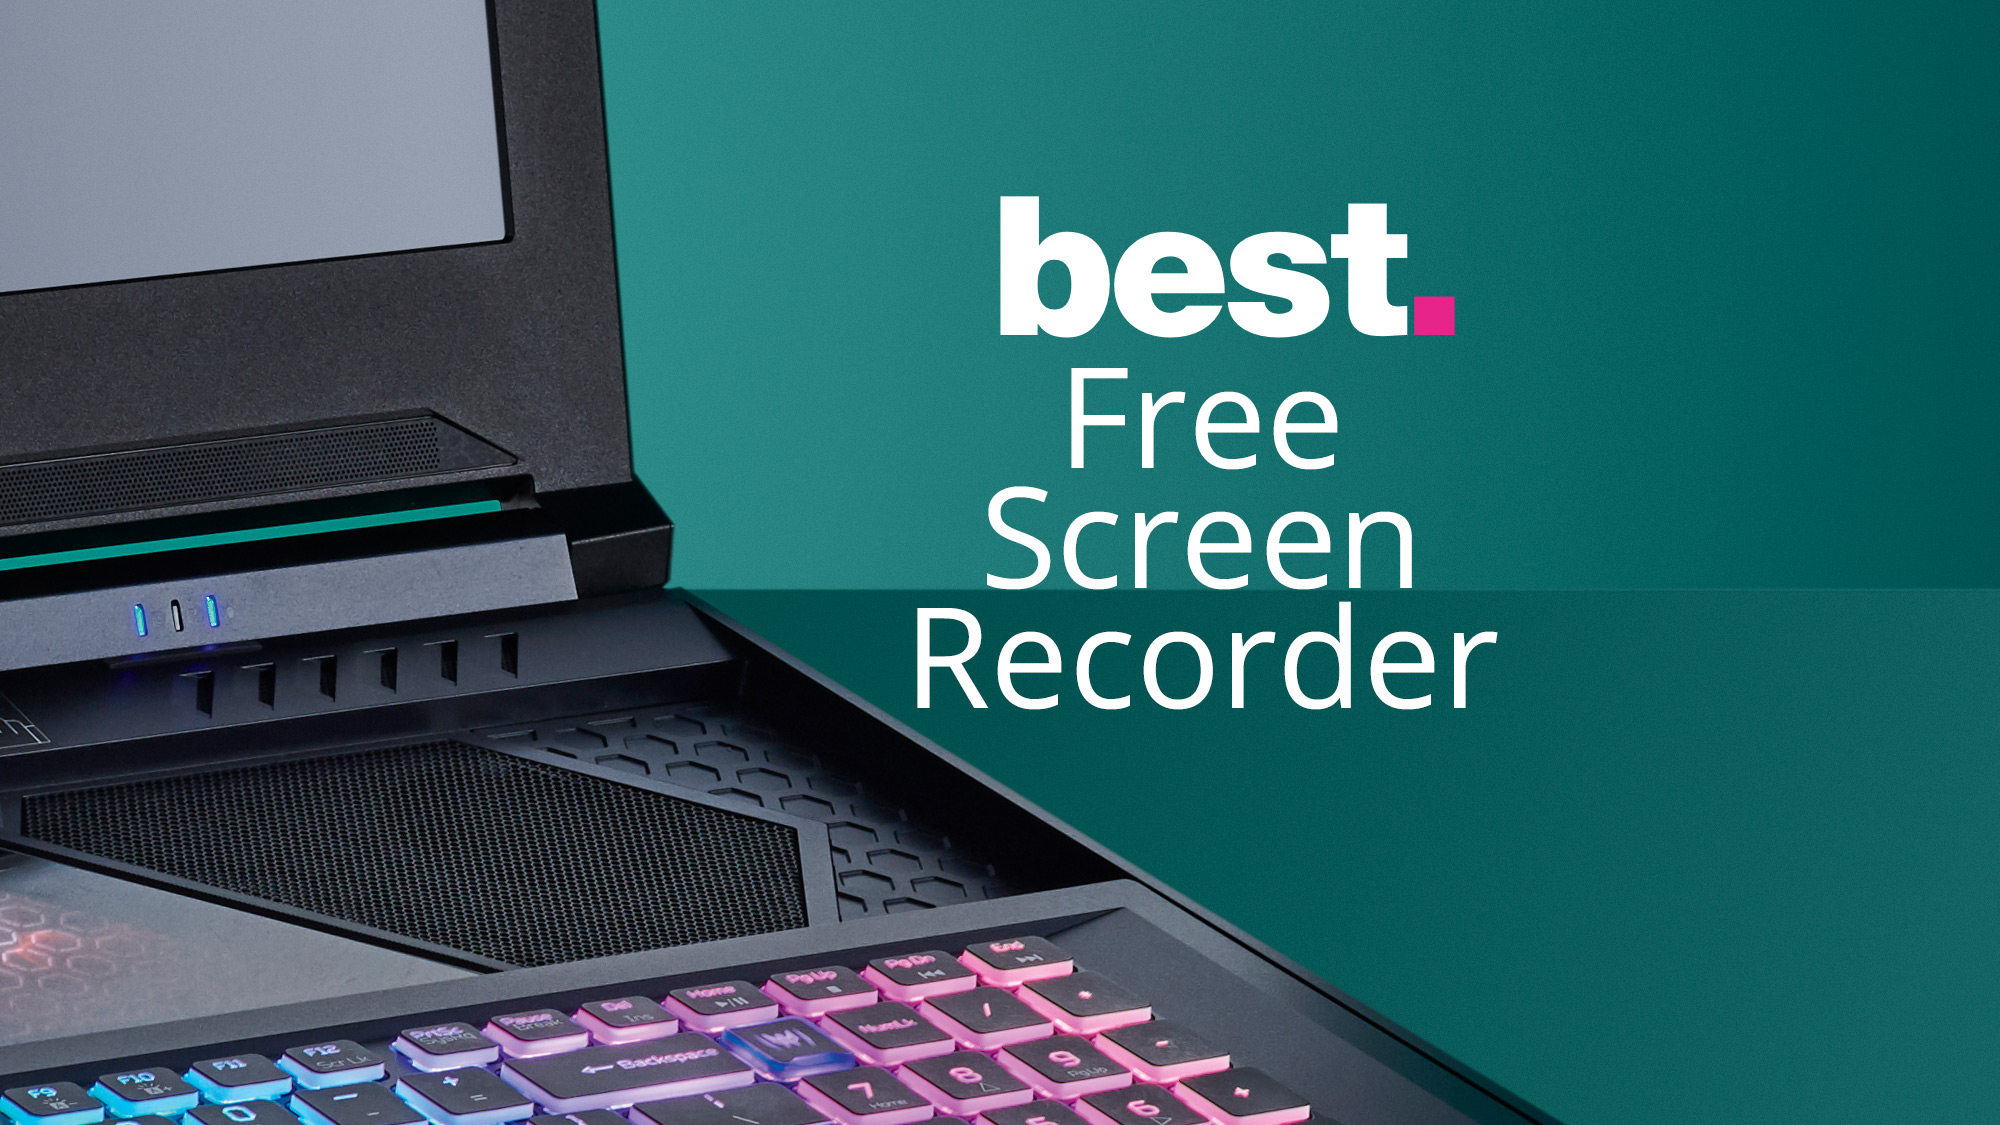 The Best Free Screen Recorder 2020 Techradar